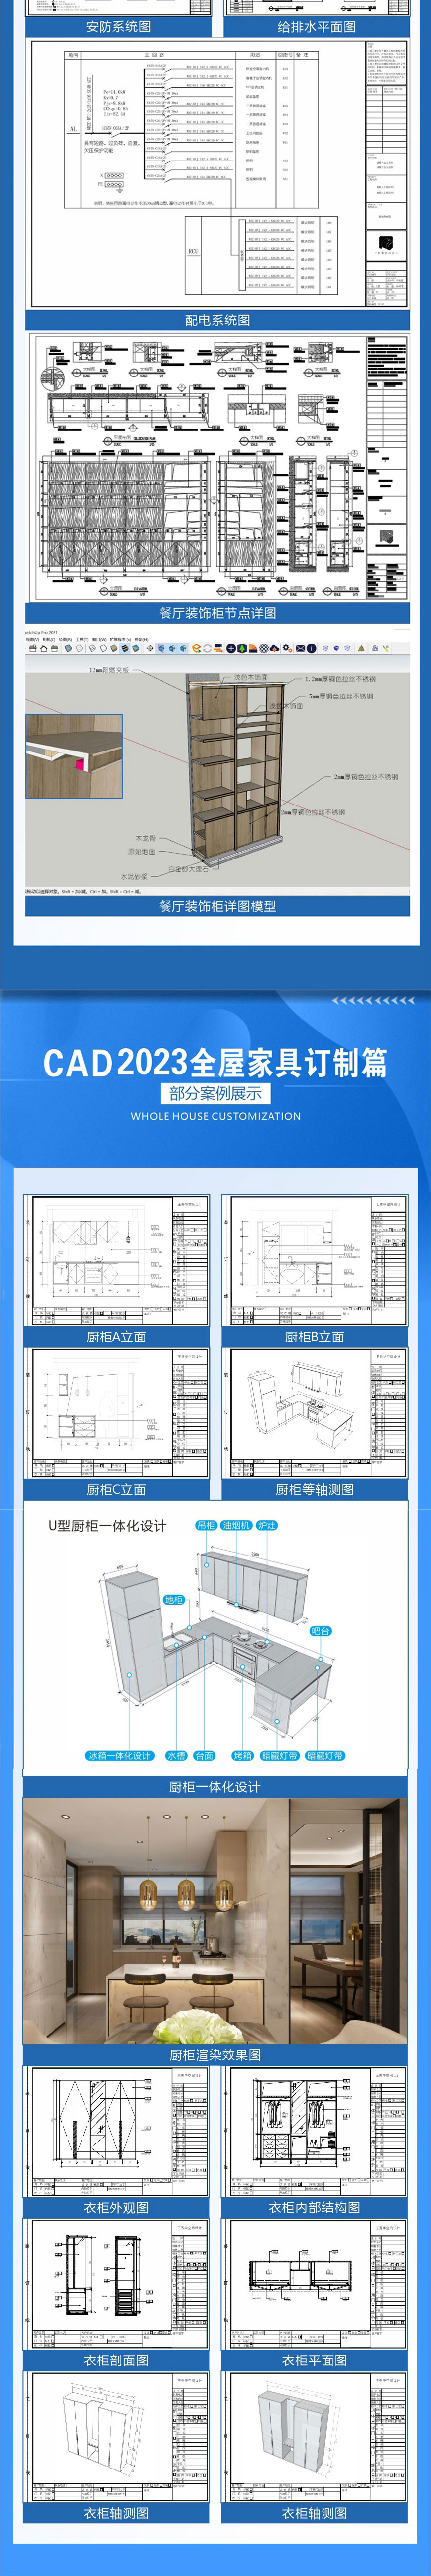 CAD 2022入门+室内复式结构全套深化施工图